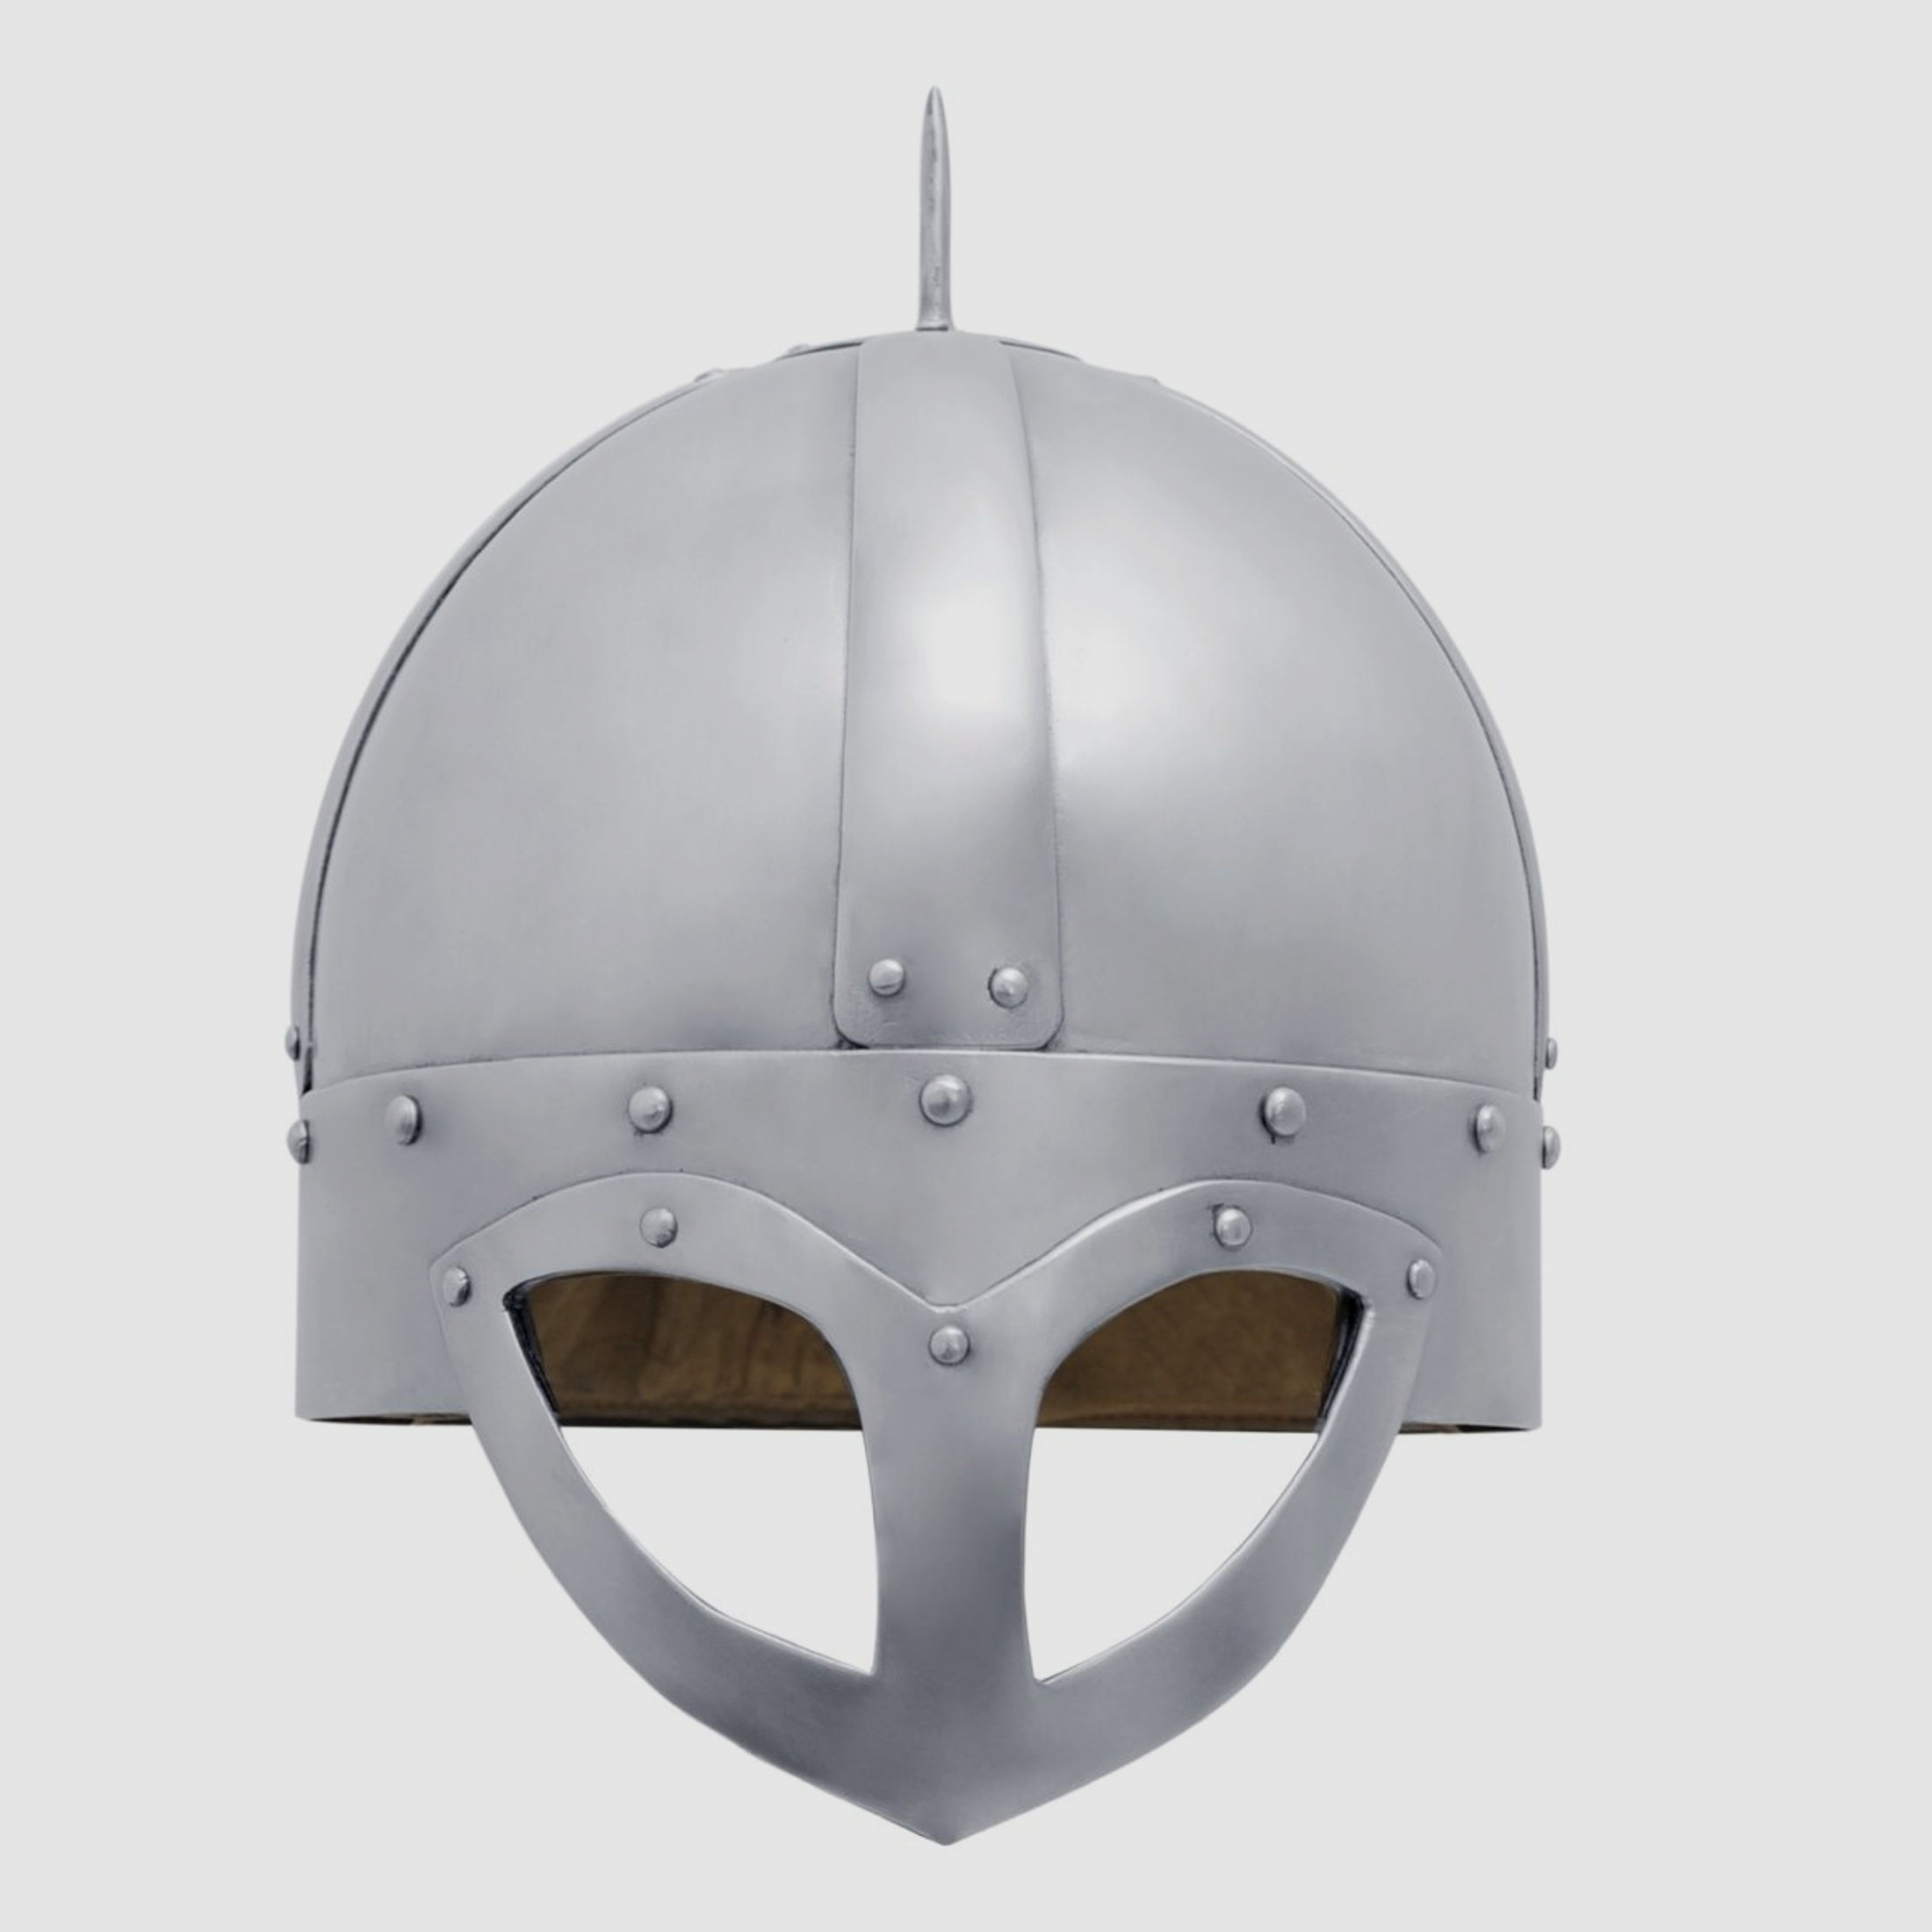 The Gjermundbu Helmet